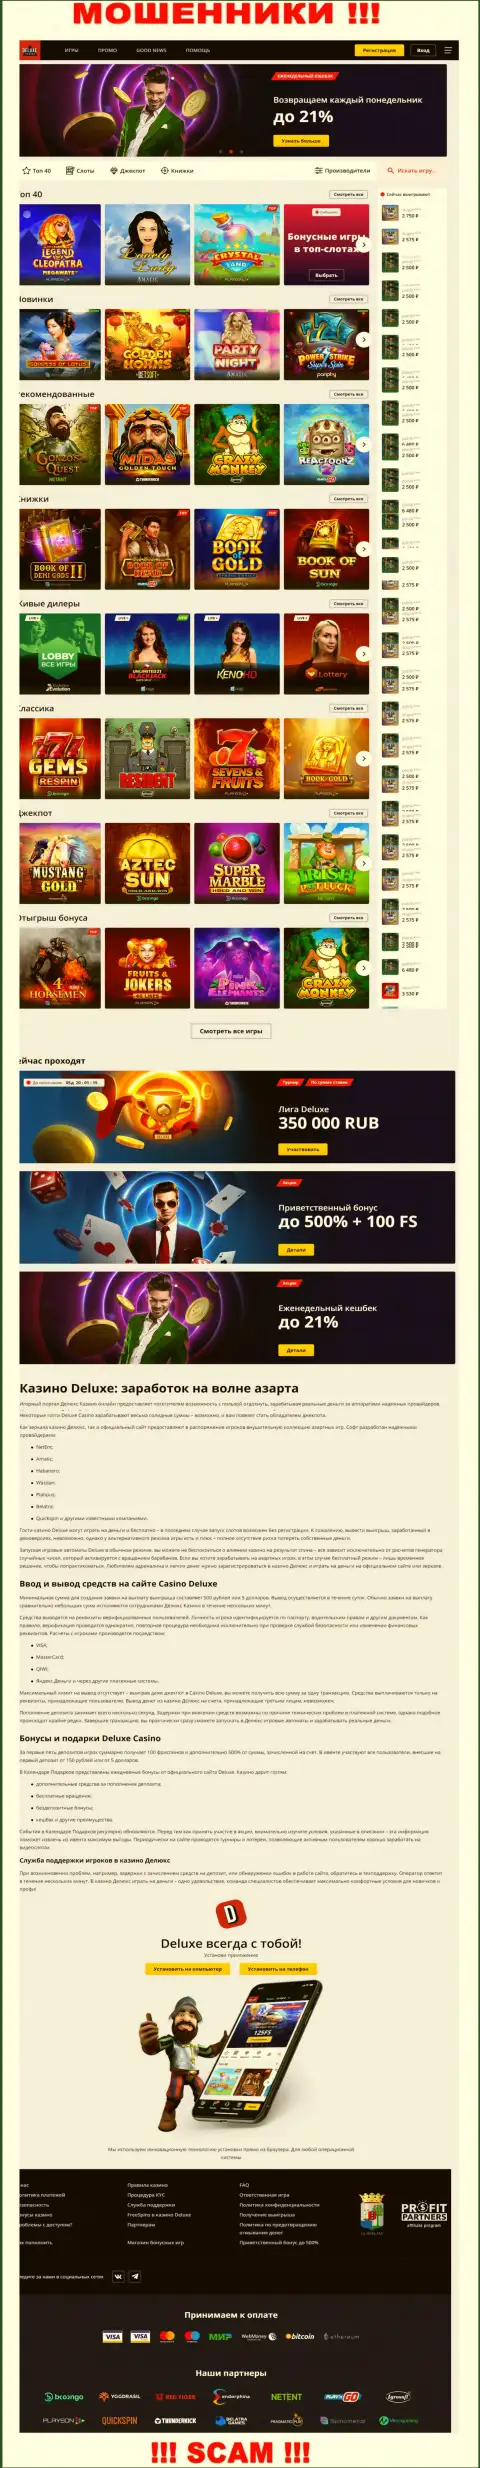 Омновная internet-страница компании Deluxe-Casino Com